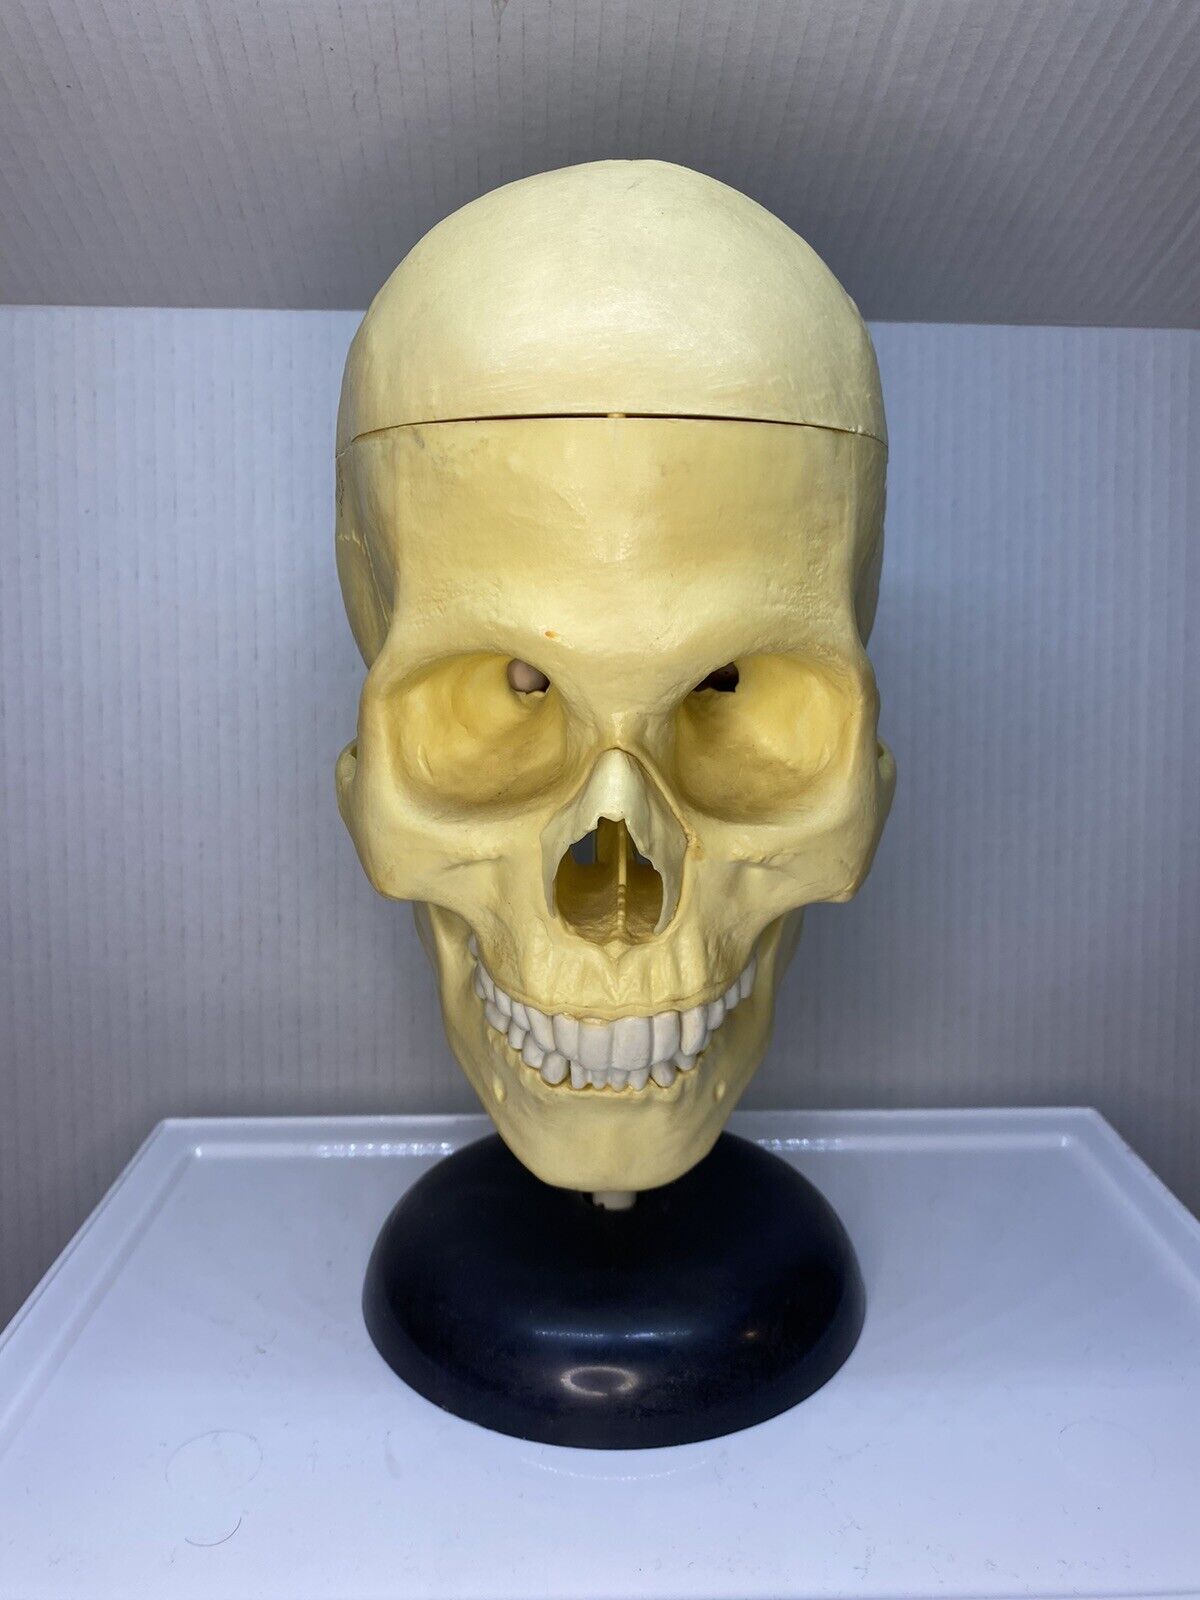 Vintage Life Size Skull and Brain Model